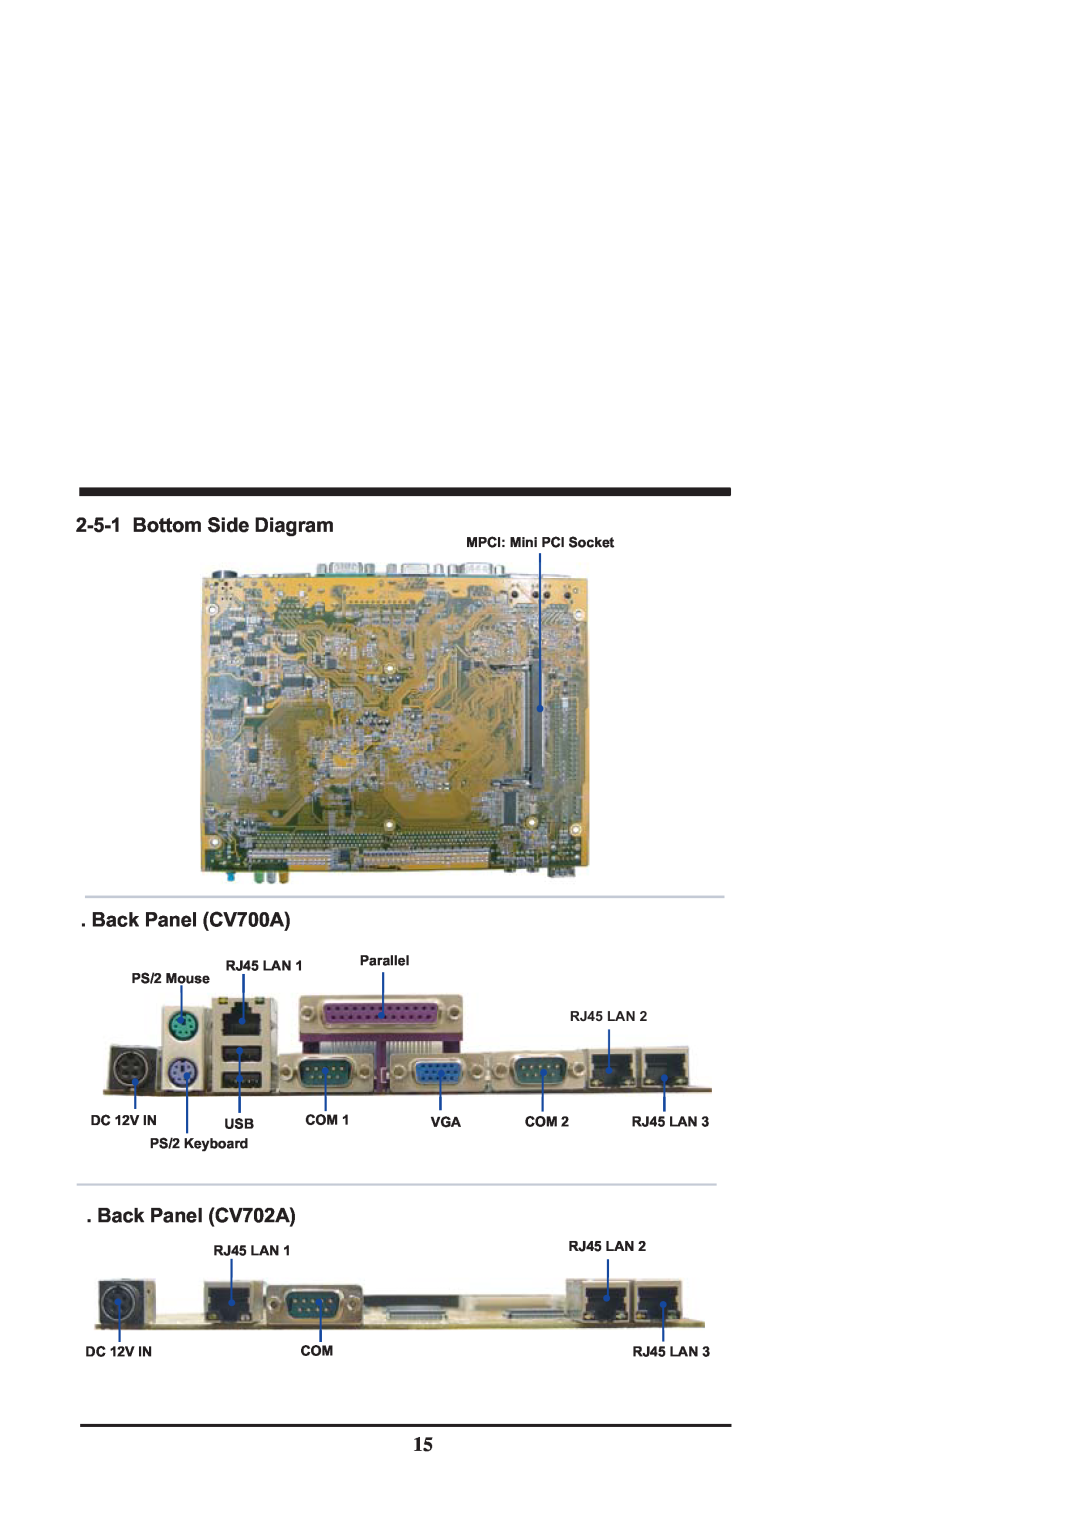 Intel CV702A, CV700A manual 2-5-1Bottom Side Diagram, Back Panel CV700A, Back Panel CV702A 